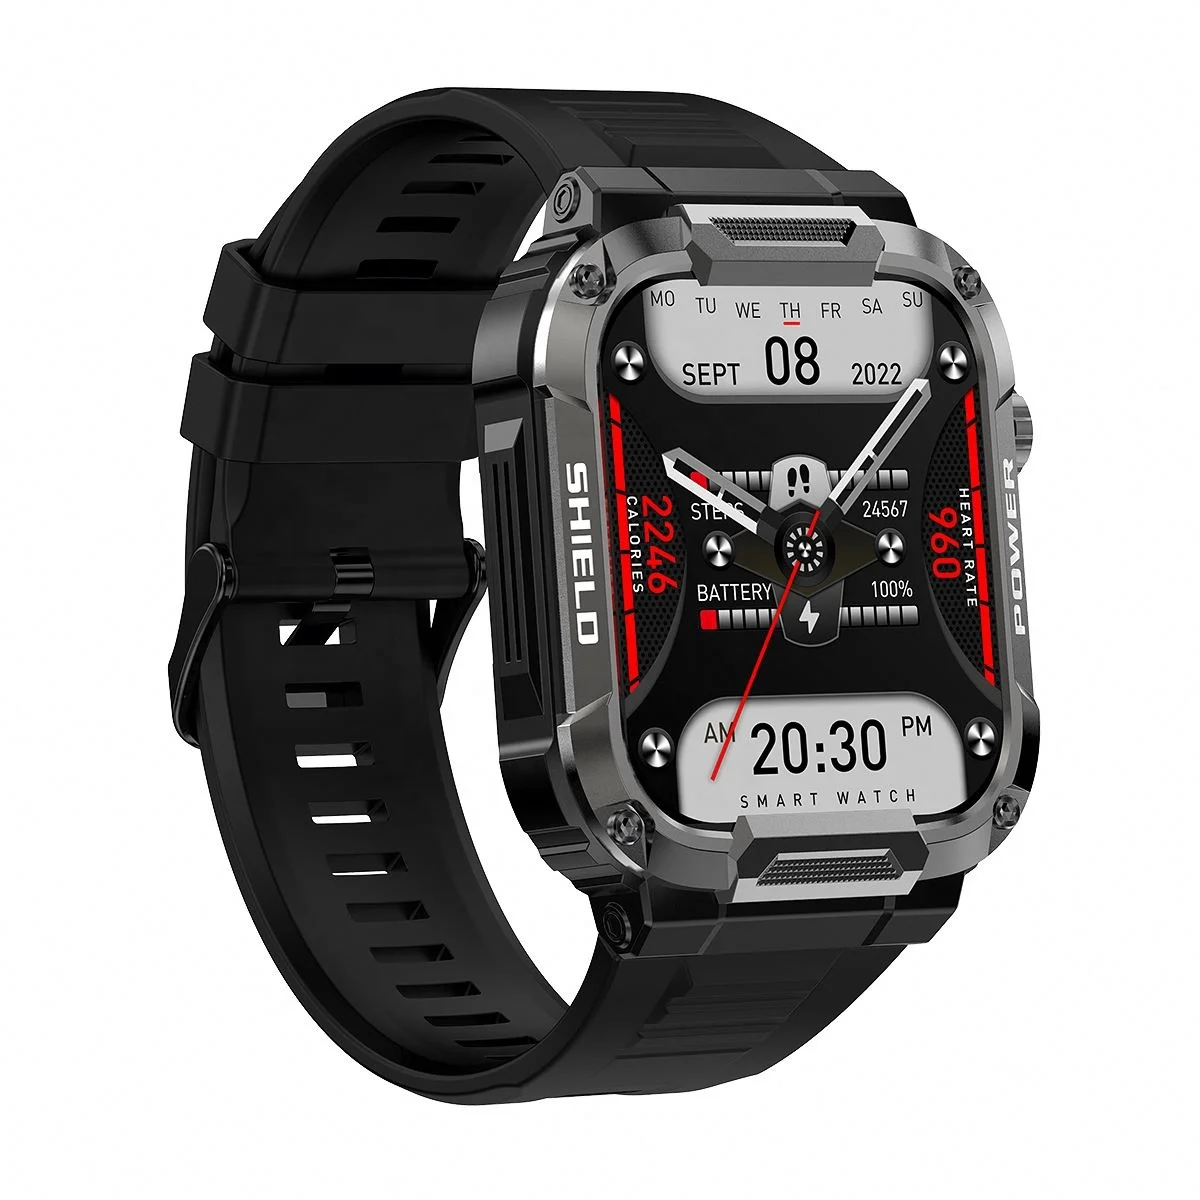 

MK66 Smart Watch 1.85 Inch Touch Screen GloryFit IP68 Waterproof MK66 Rugged Smartwatch for Men Outdoor Sports